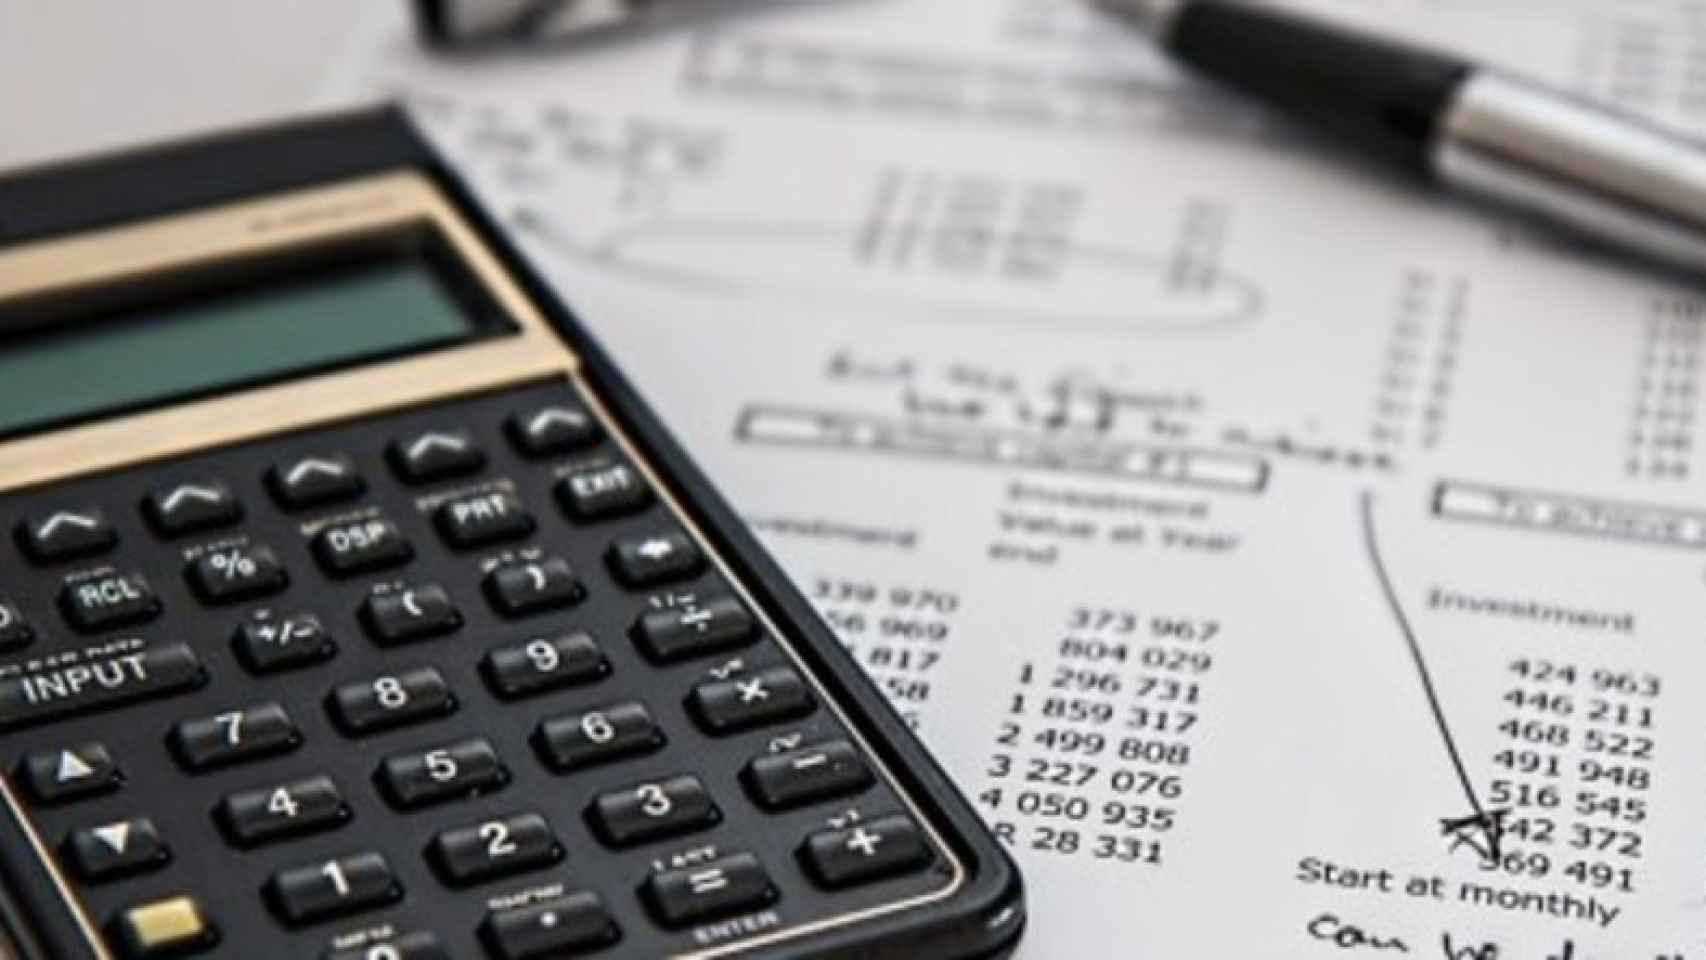 calculator-calculation-insurance